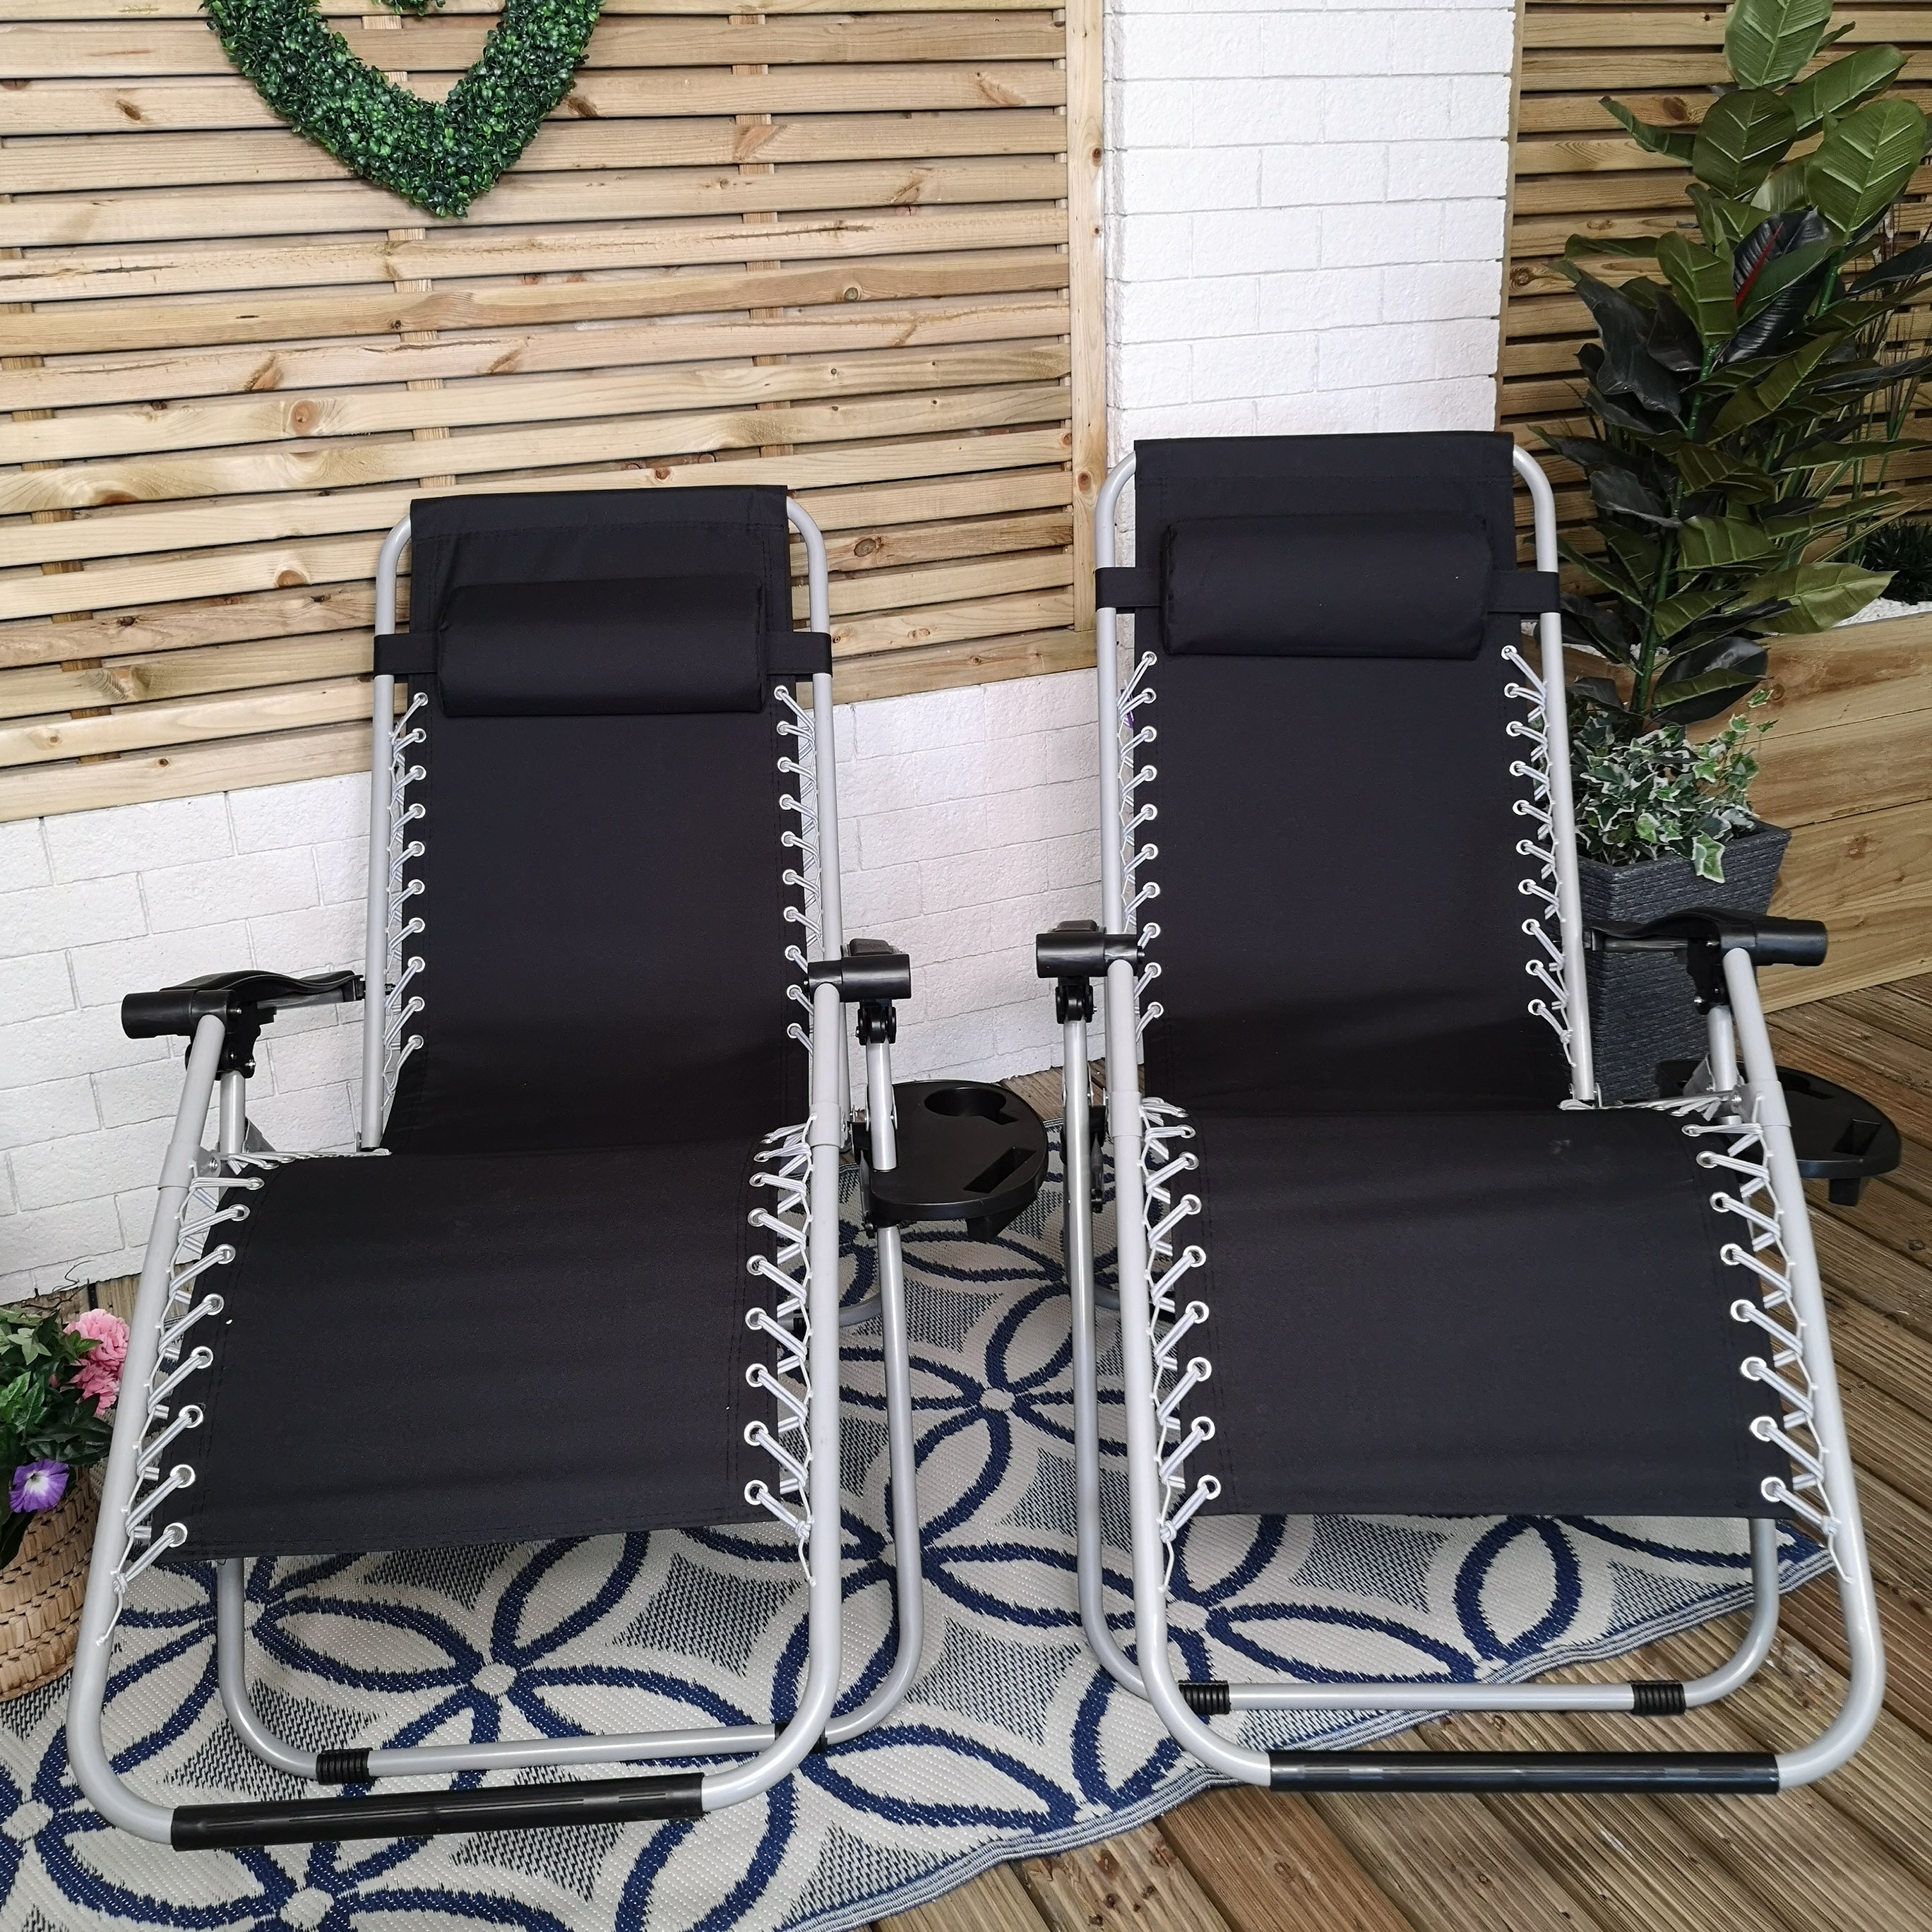 Set of 2 Multi Position Garden Zero Gravity Relaxer Chair Sun Lounger in Black & Silver